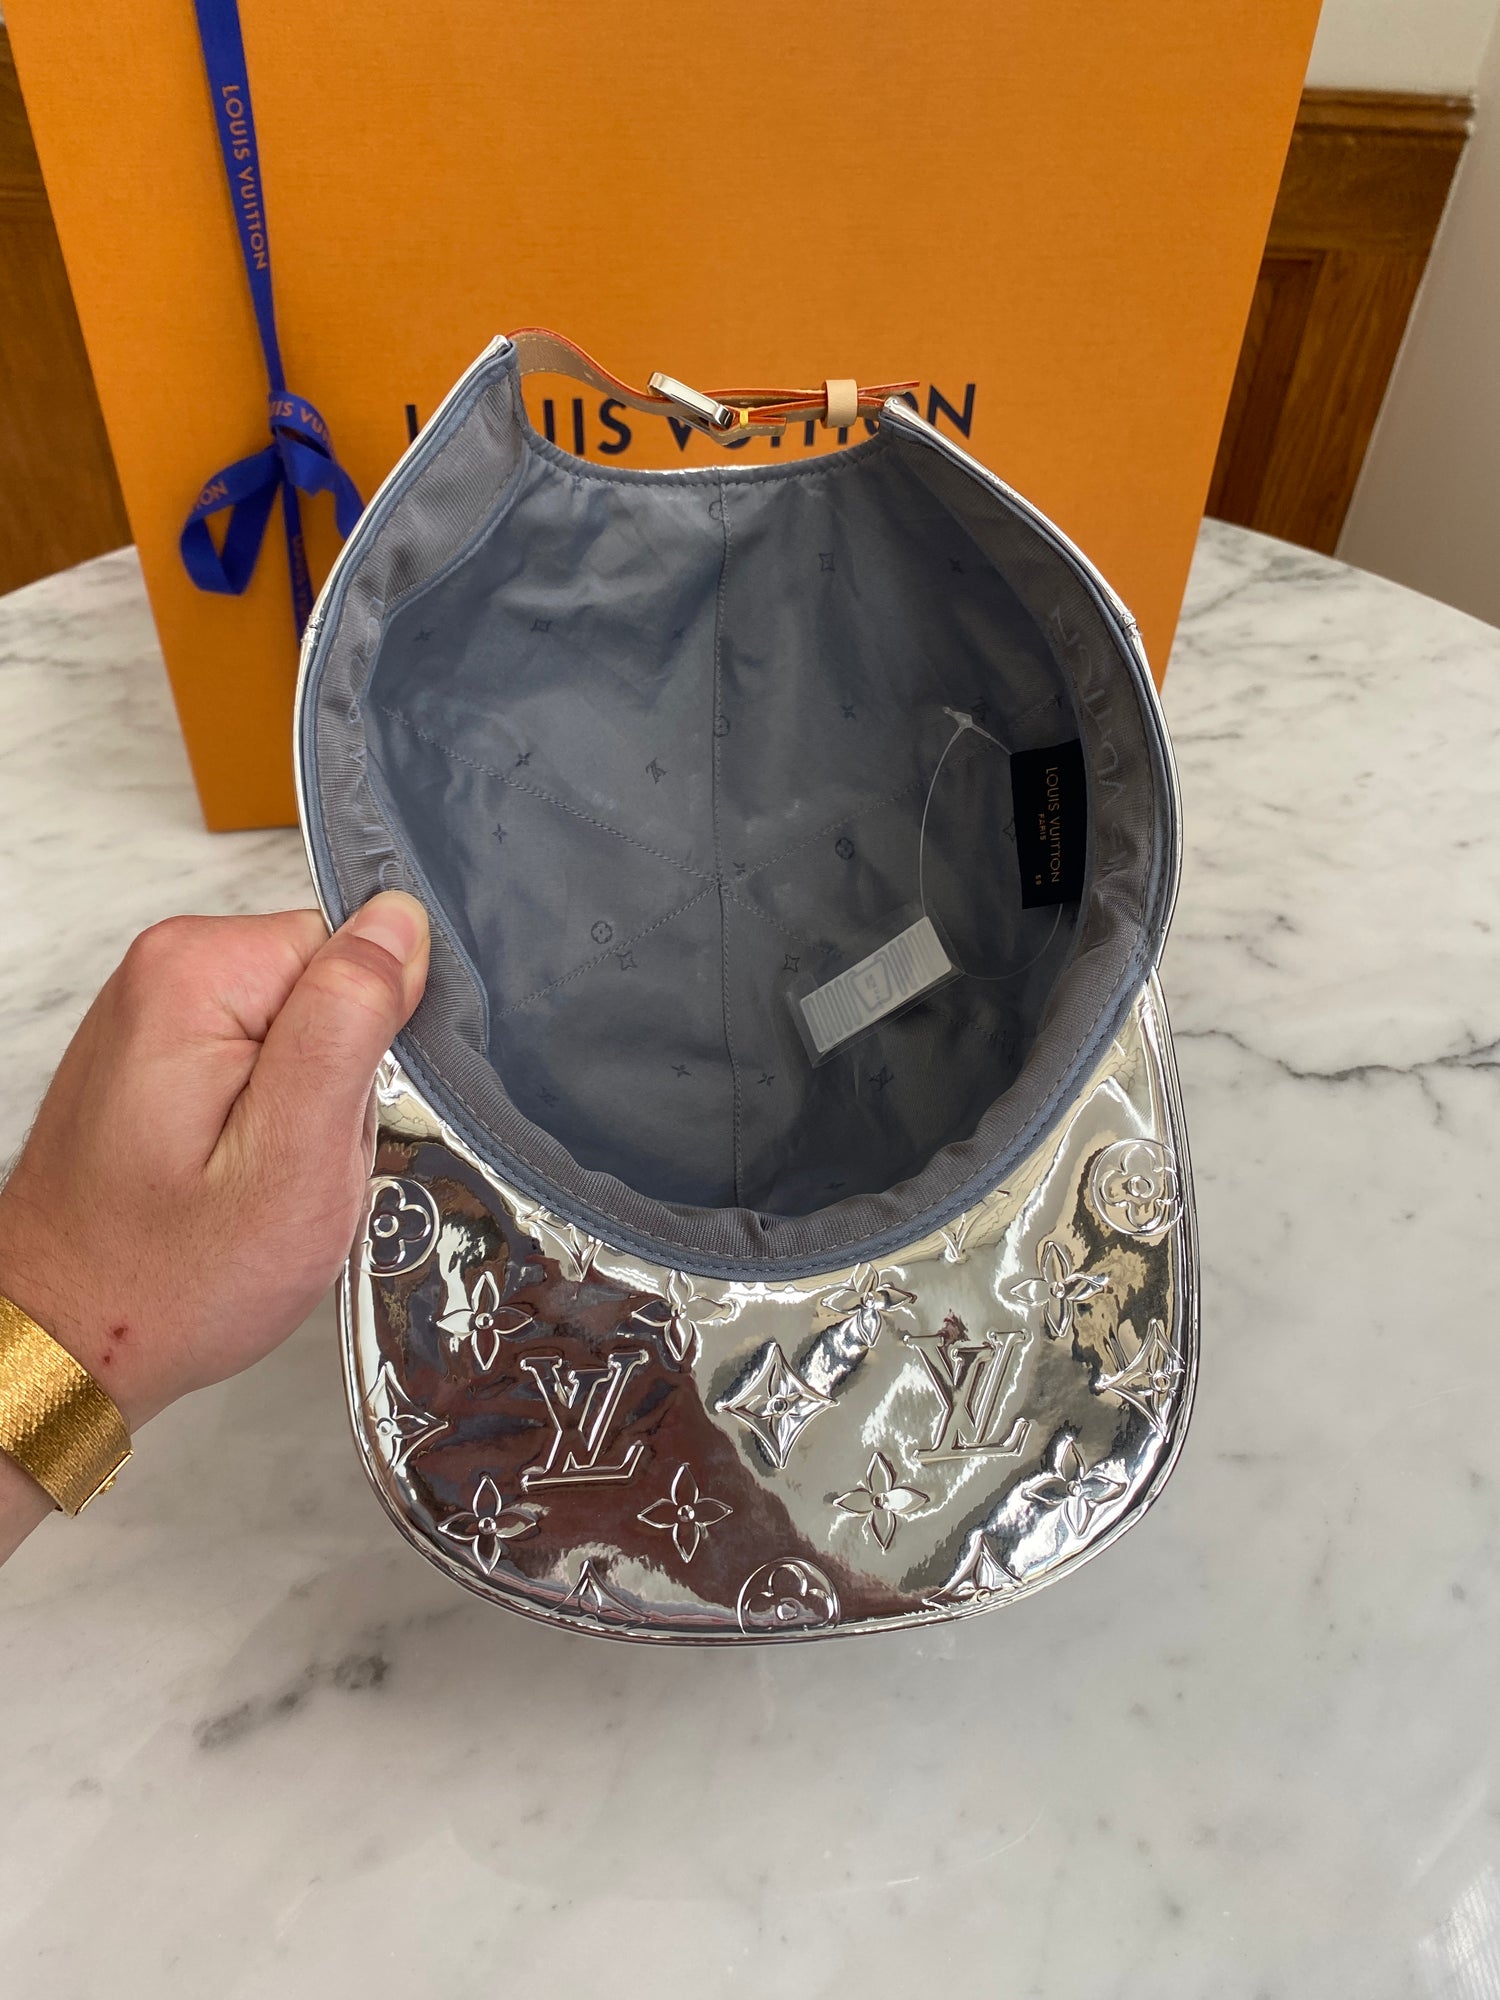 Louis Vuitton - Beige LV Monogram Nylon Get Ready Hat – eluXive